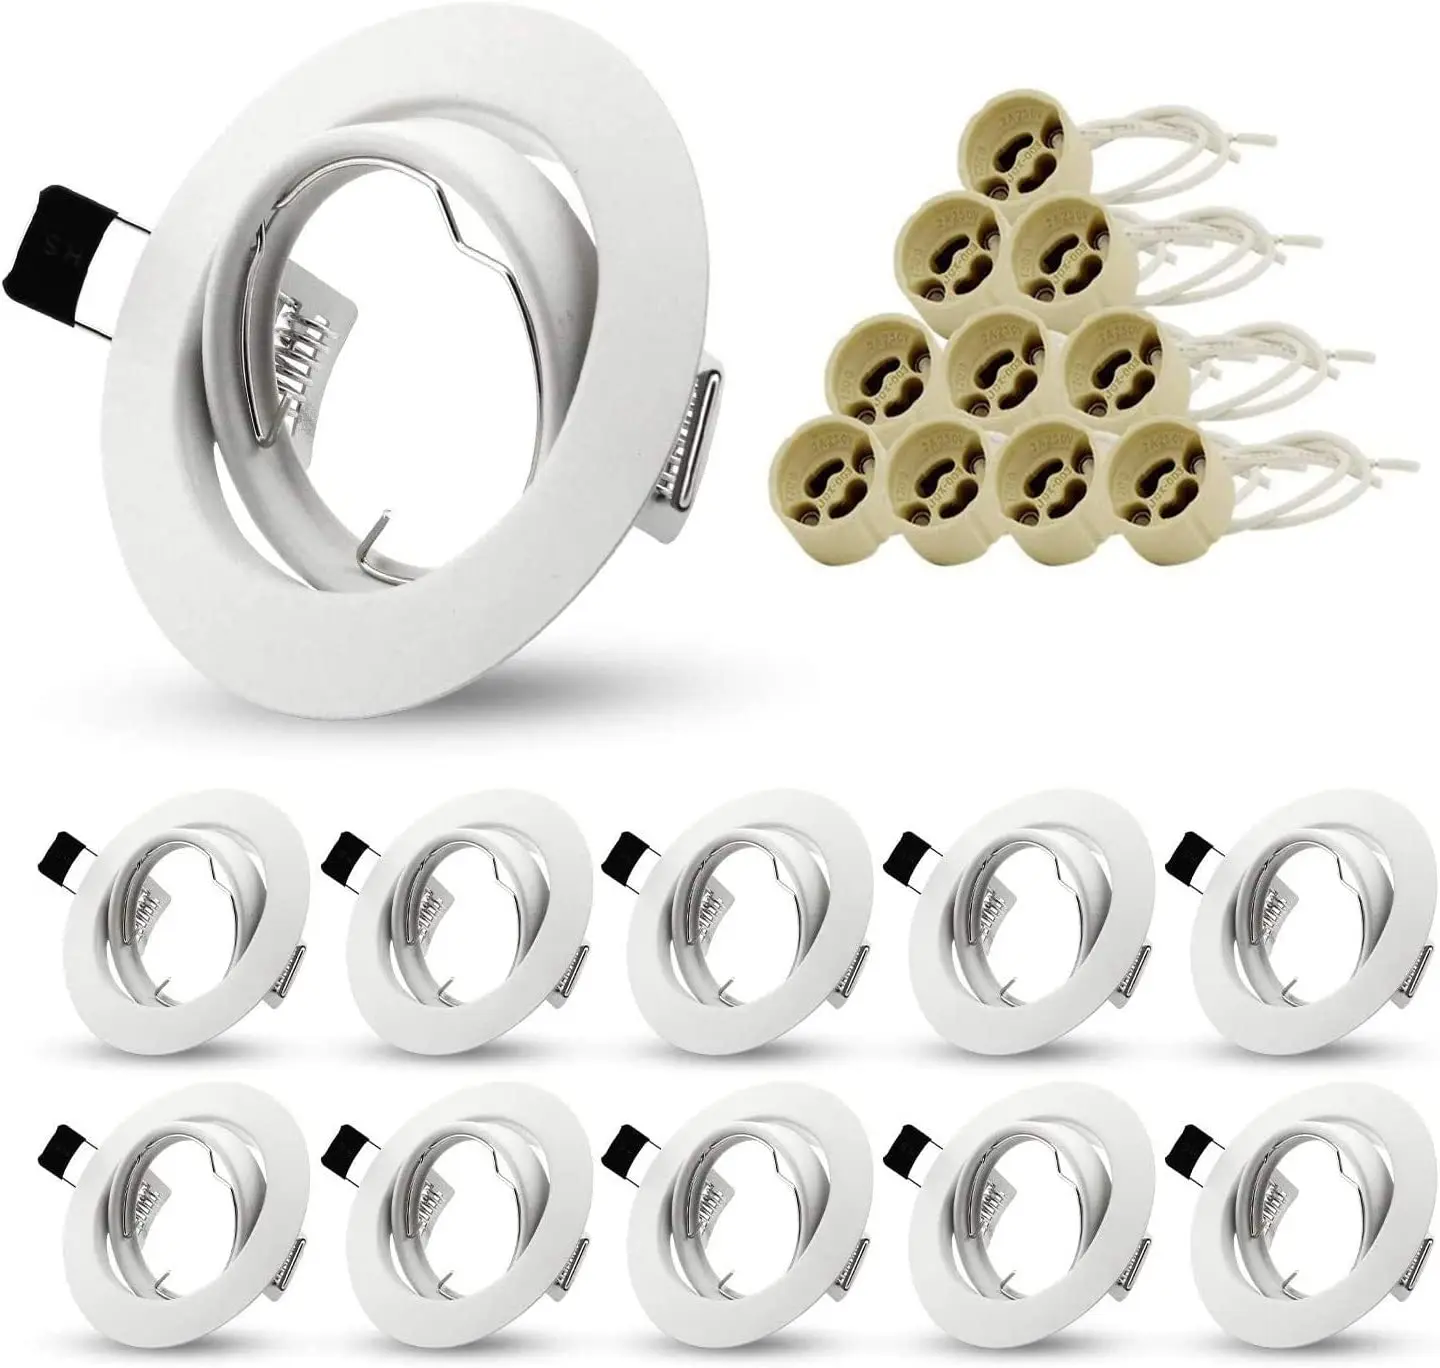 Gu10 Mr16 LED Ceiling Downlights Frame Recessed Rotatable Lamps Holder Double Ring LED Socket Base Spot Bracket Fitting